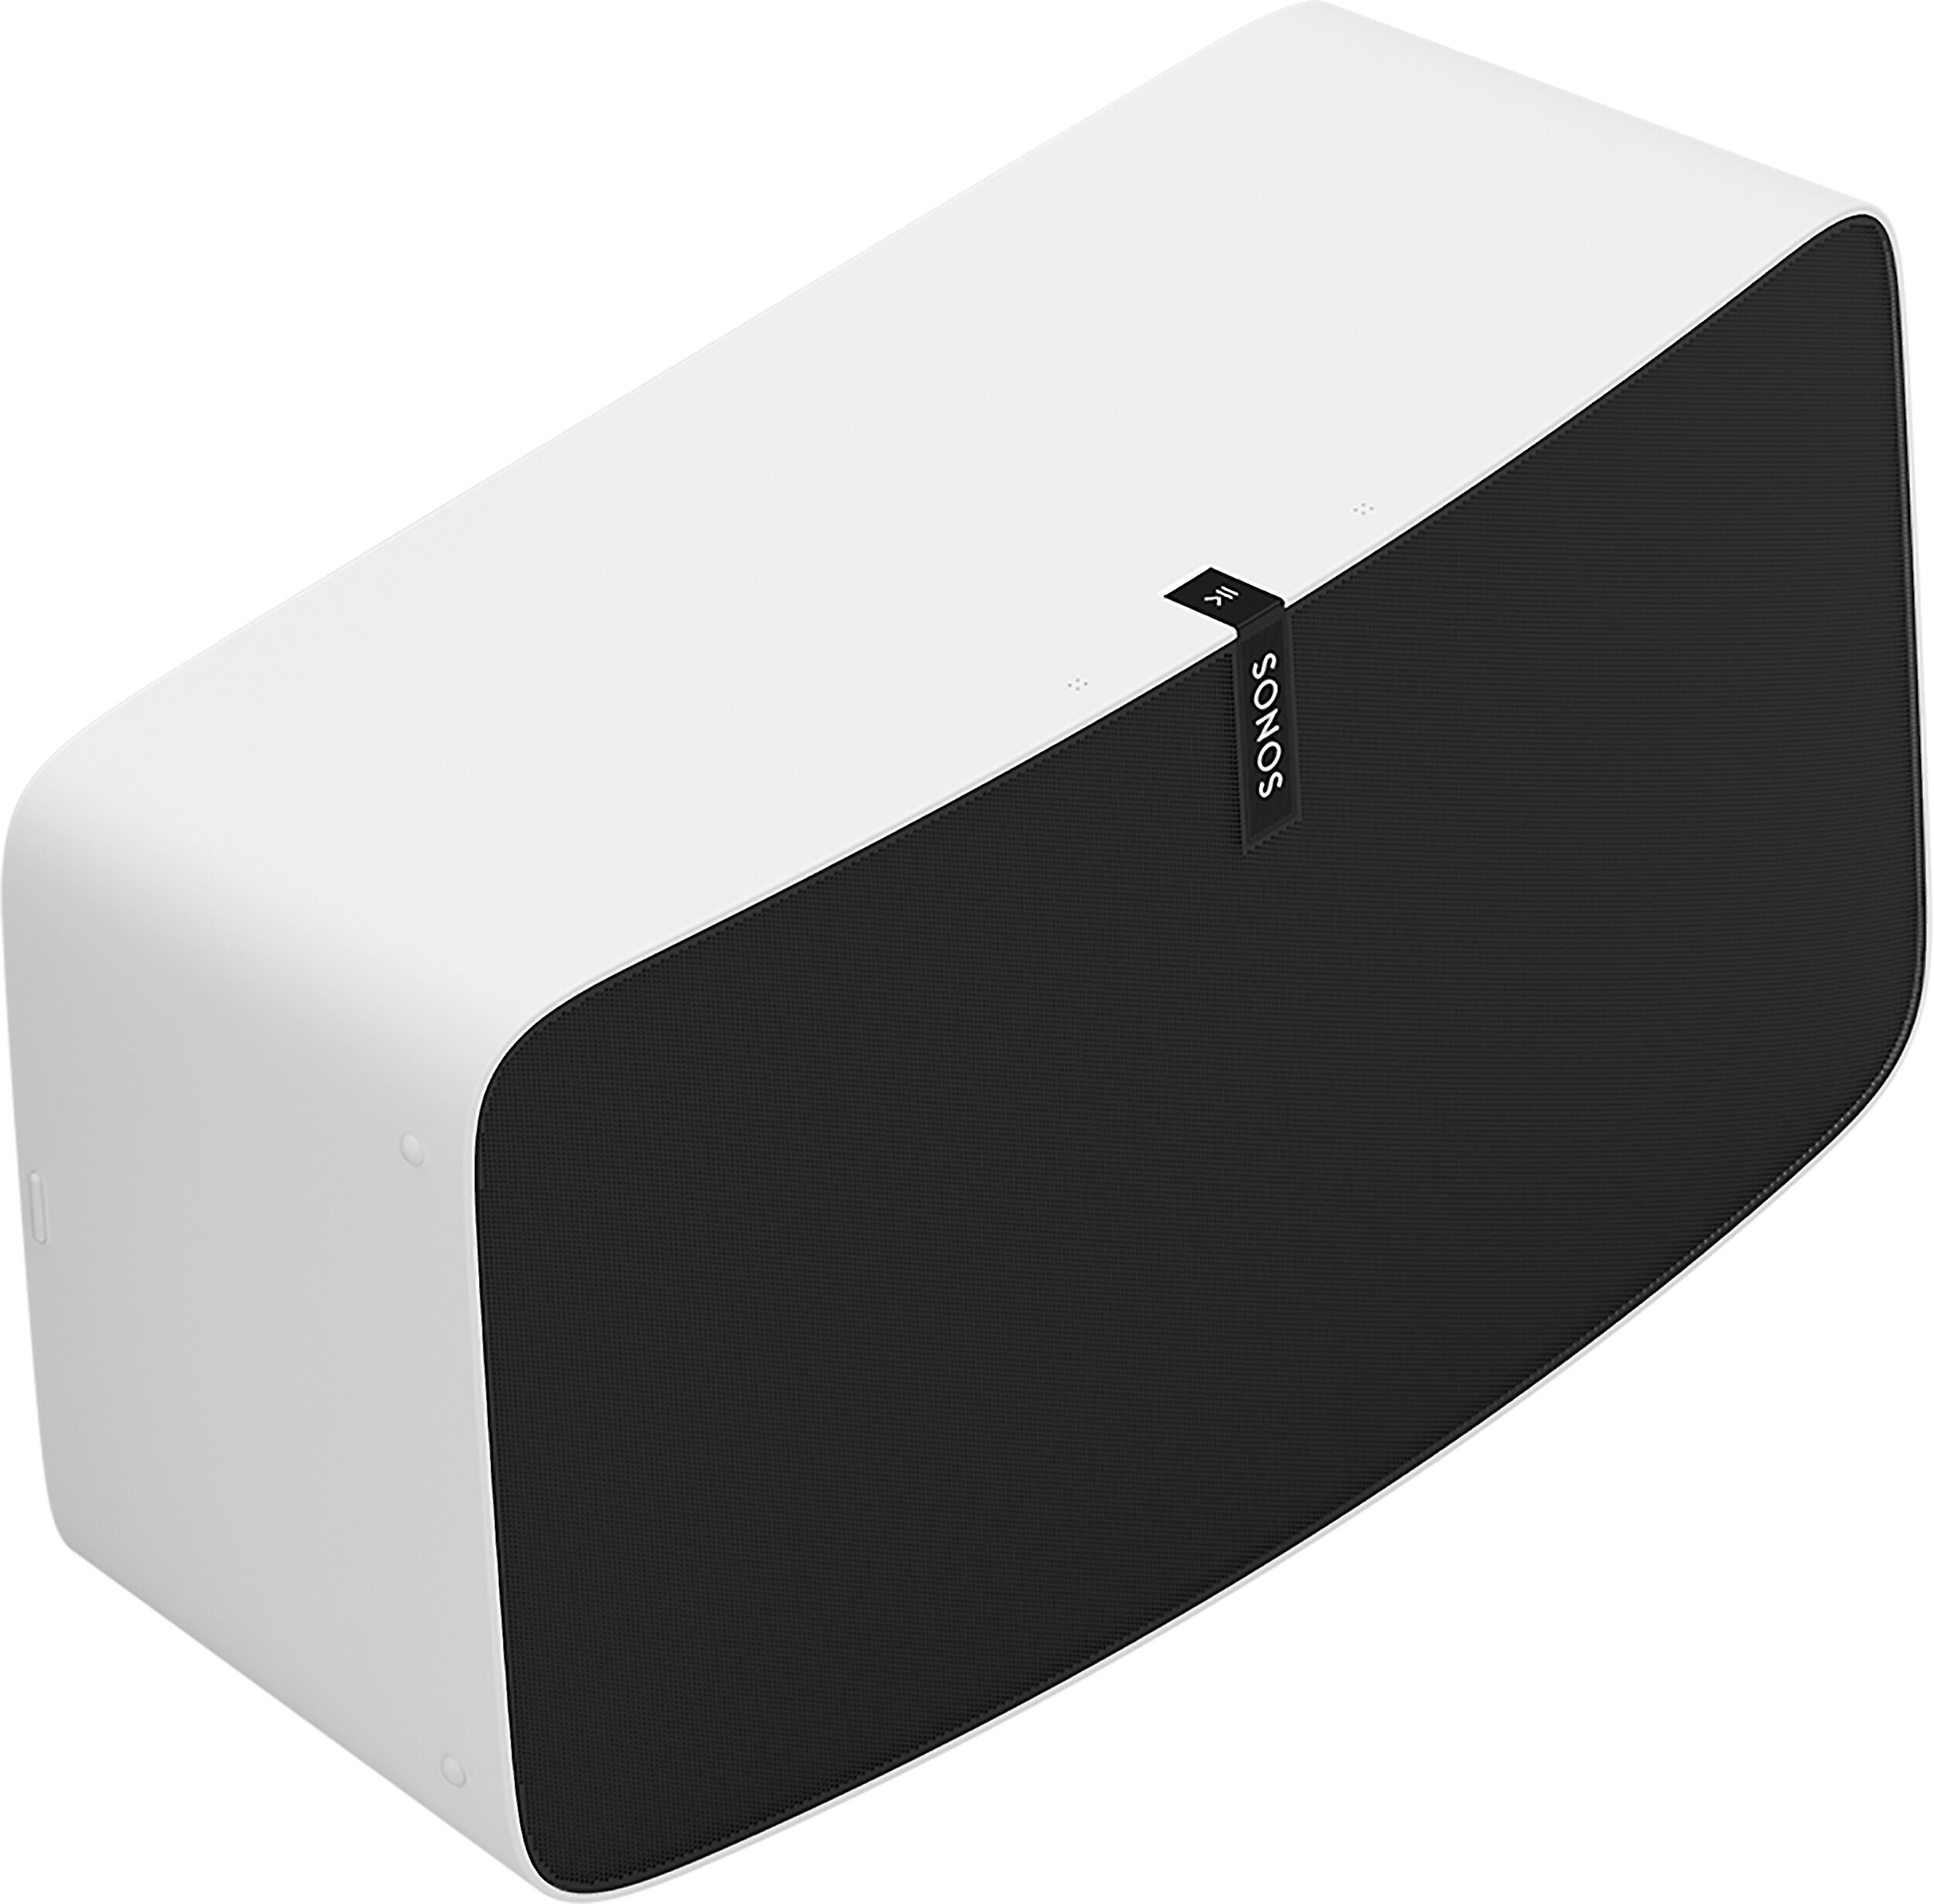 Customer Reviews: Sonos Play:5 (White) Wireless streaming music